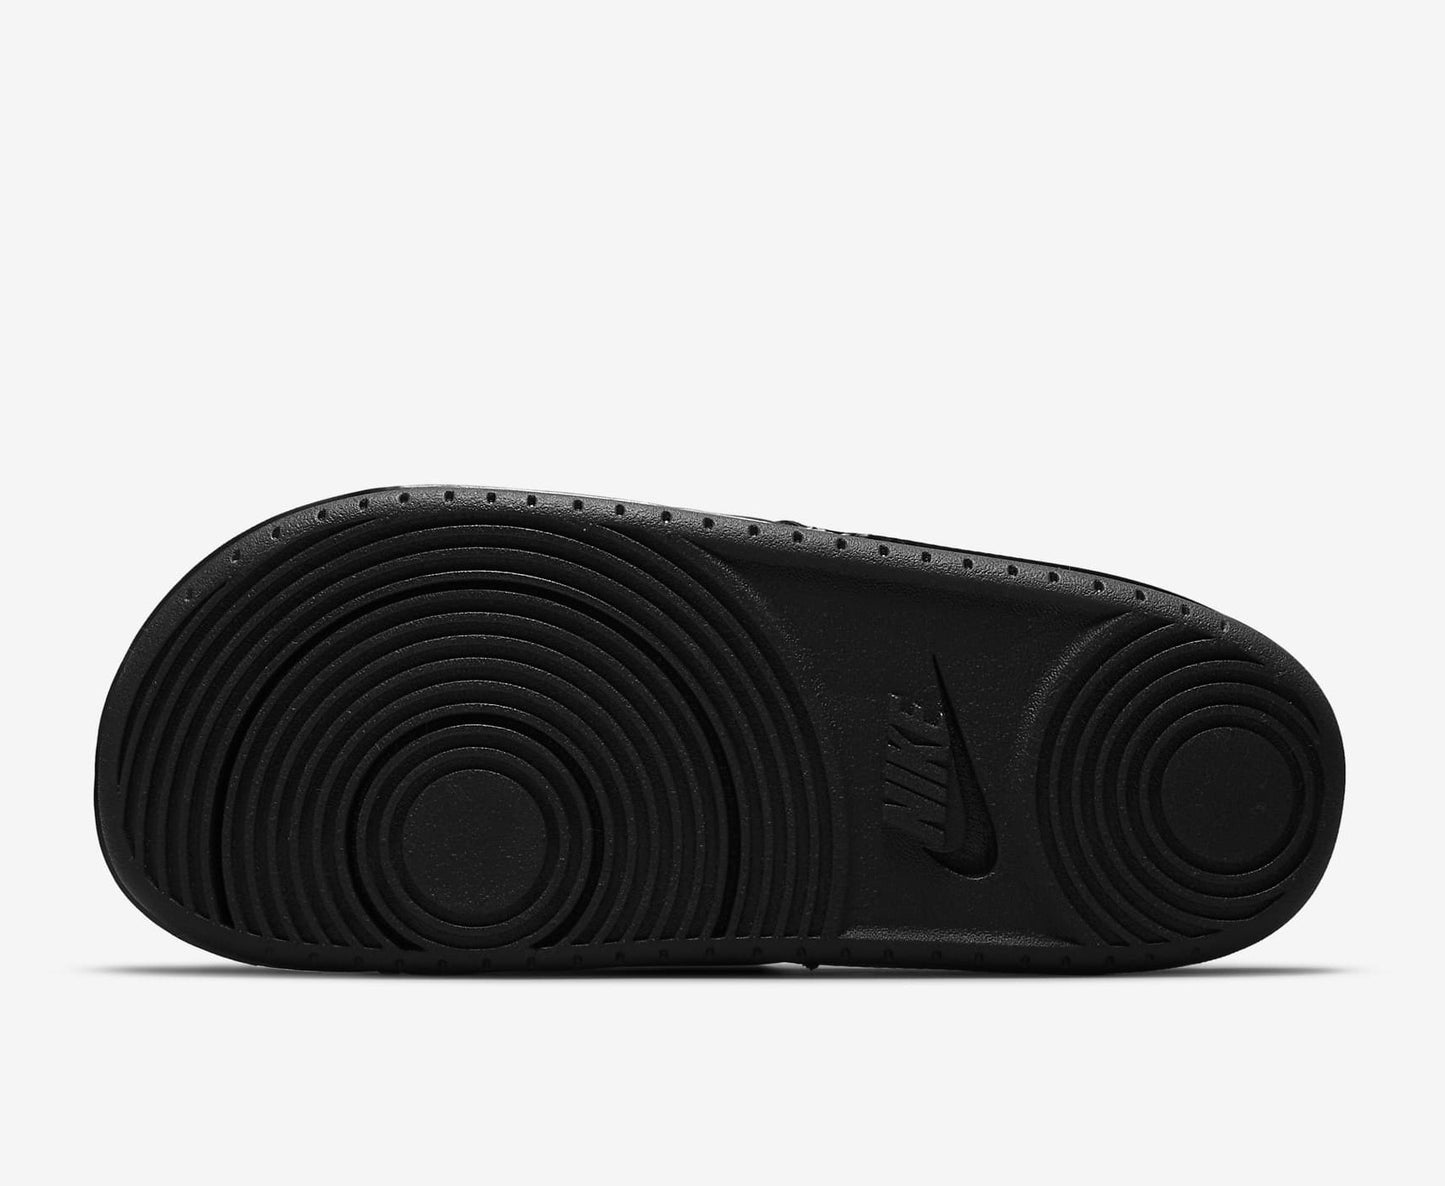 Nike Unisex Offcourt Slides - (BQ4639 012) - OF - R2L15